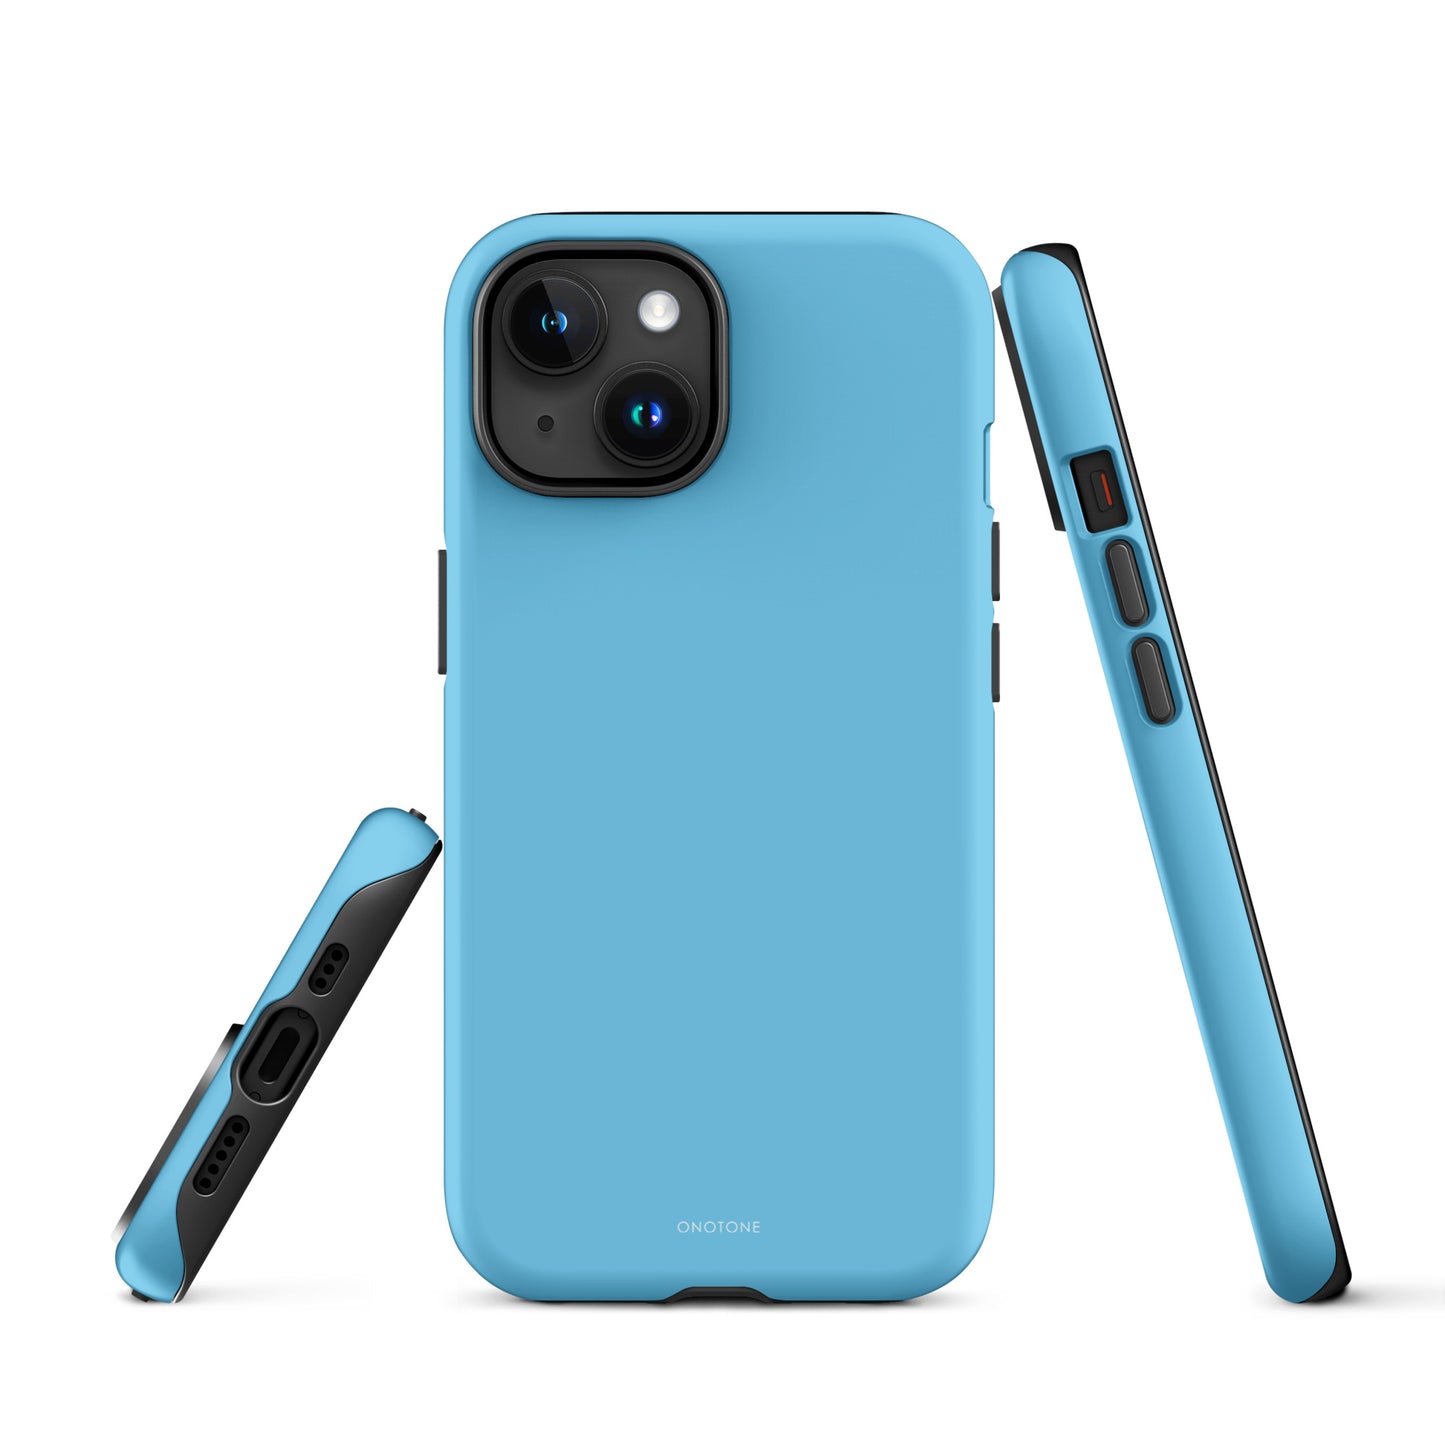 Solid Color blue iPhone® Case - Pantone® 297